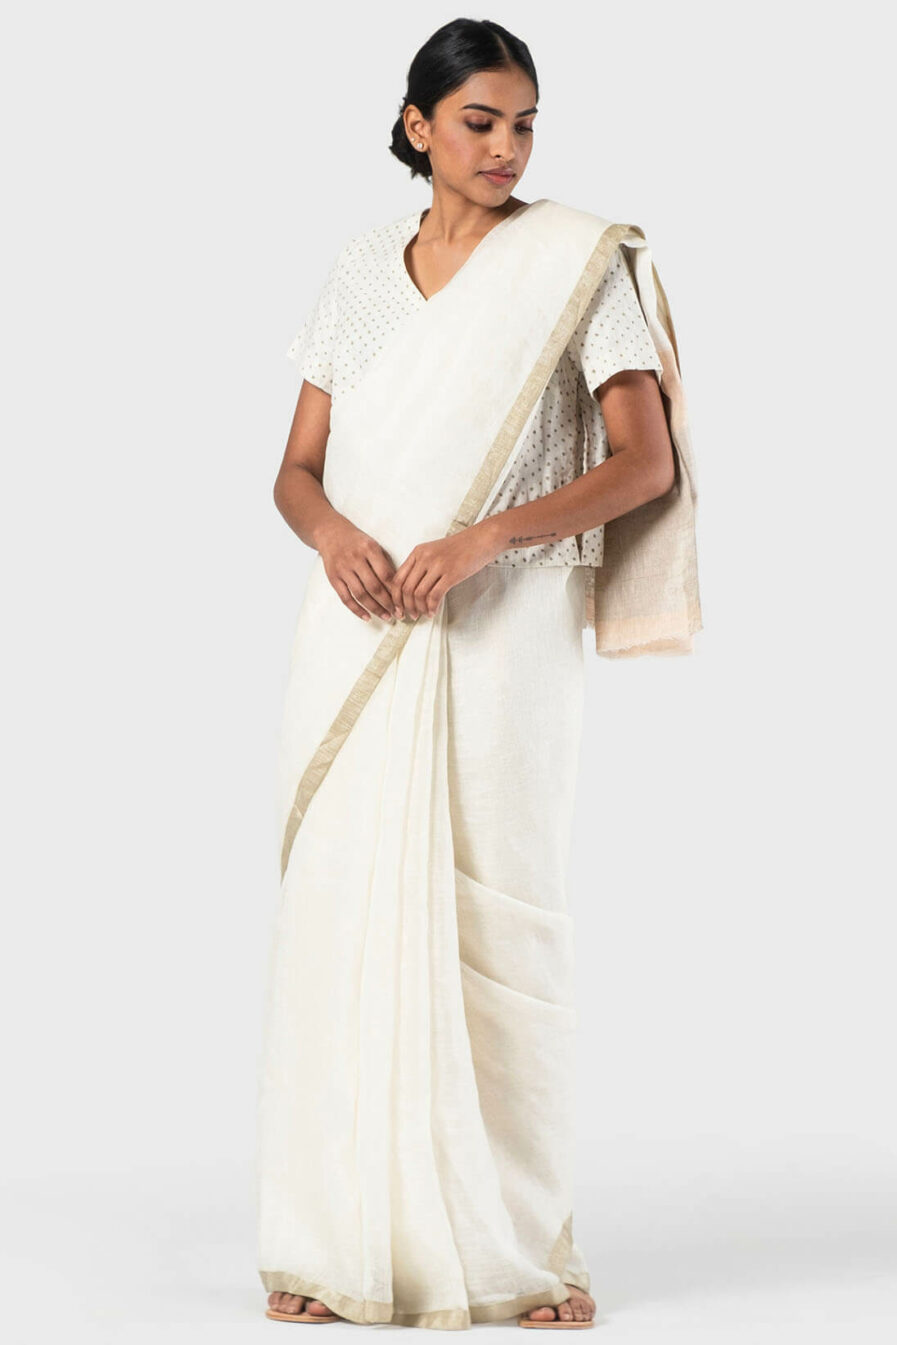 Anavila Ivory basic zari white sari